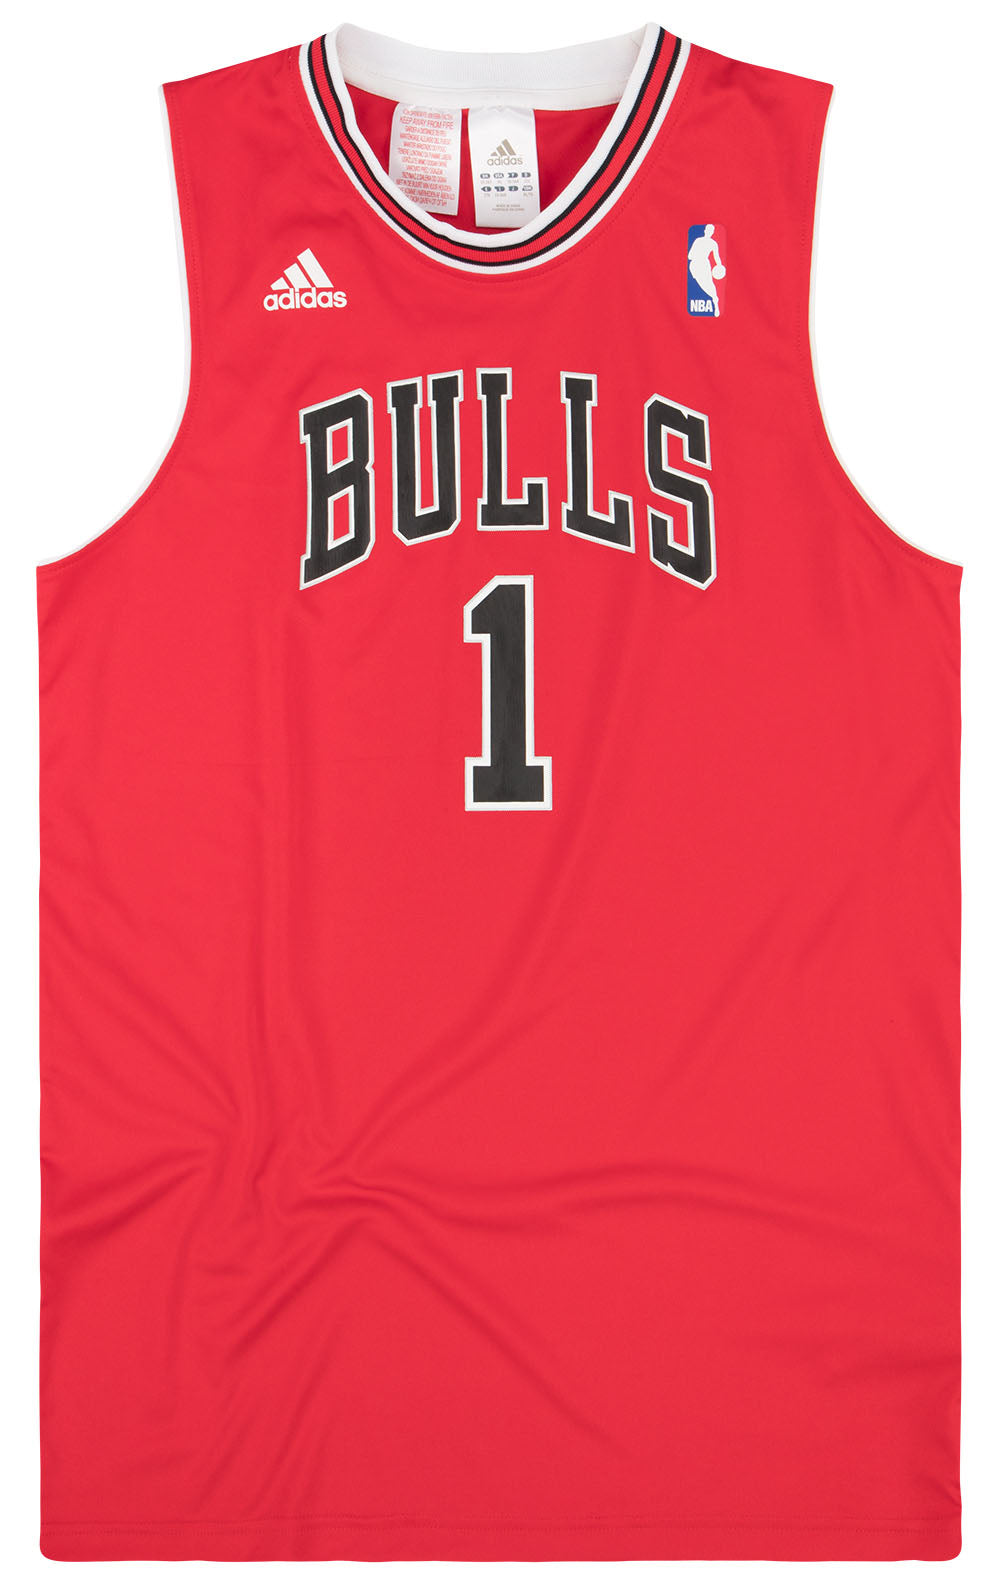 Derrick Rose #1 Chicago Bulls NBA Basketball Jersey Adidas Youth